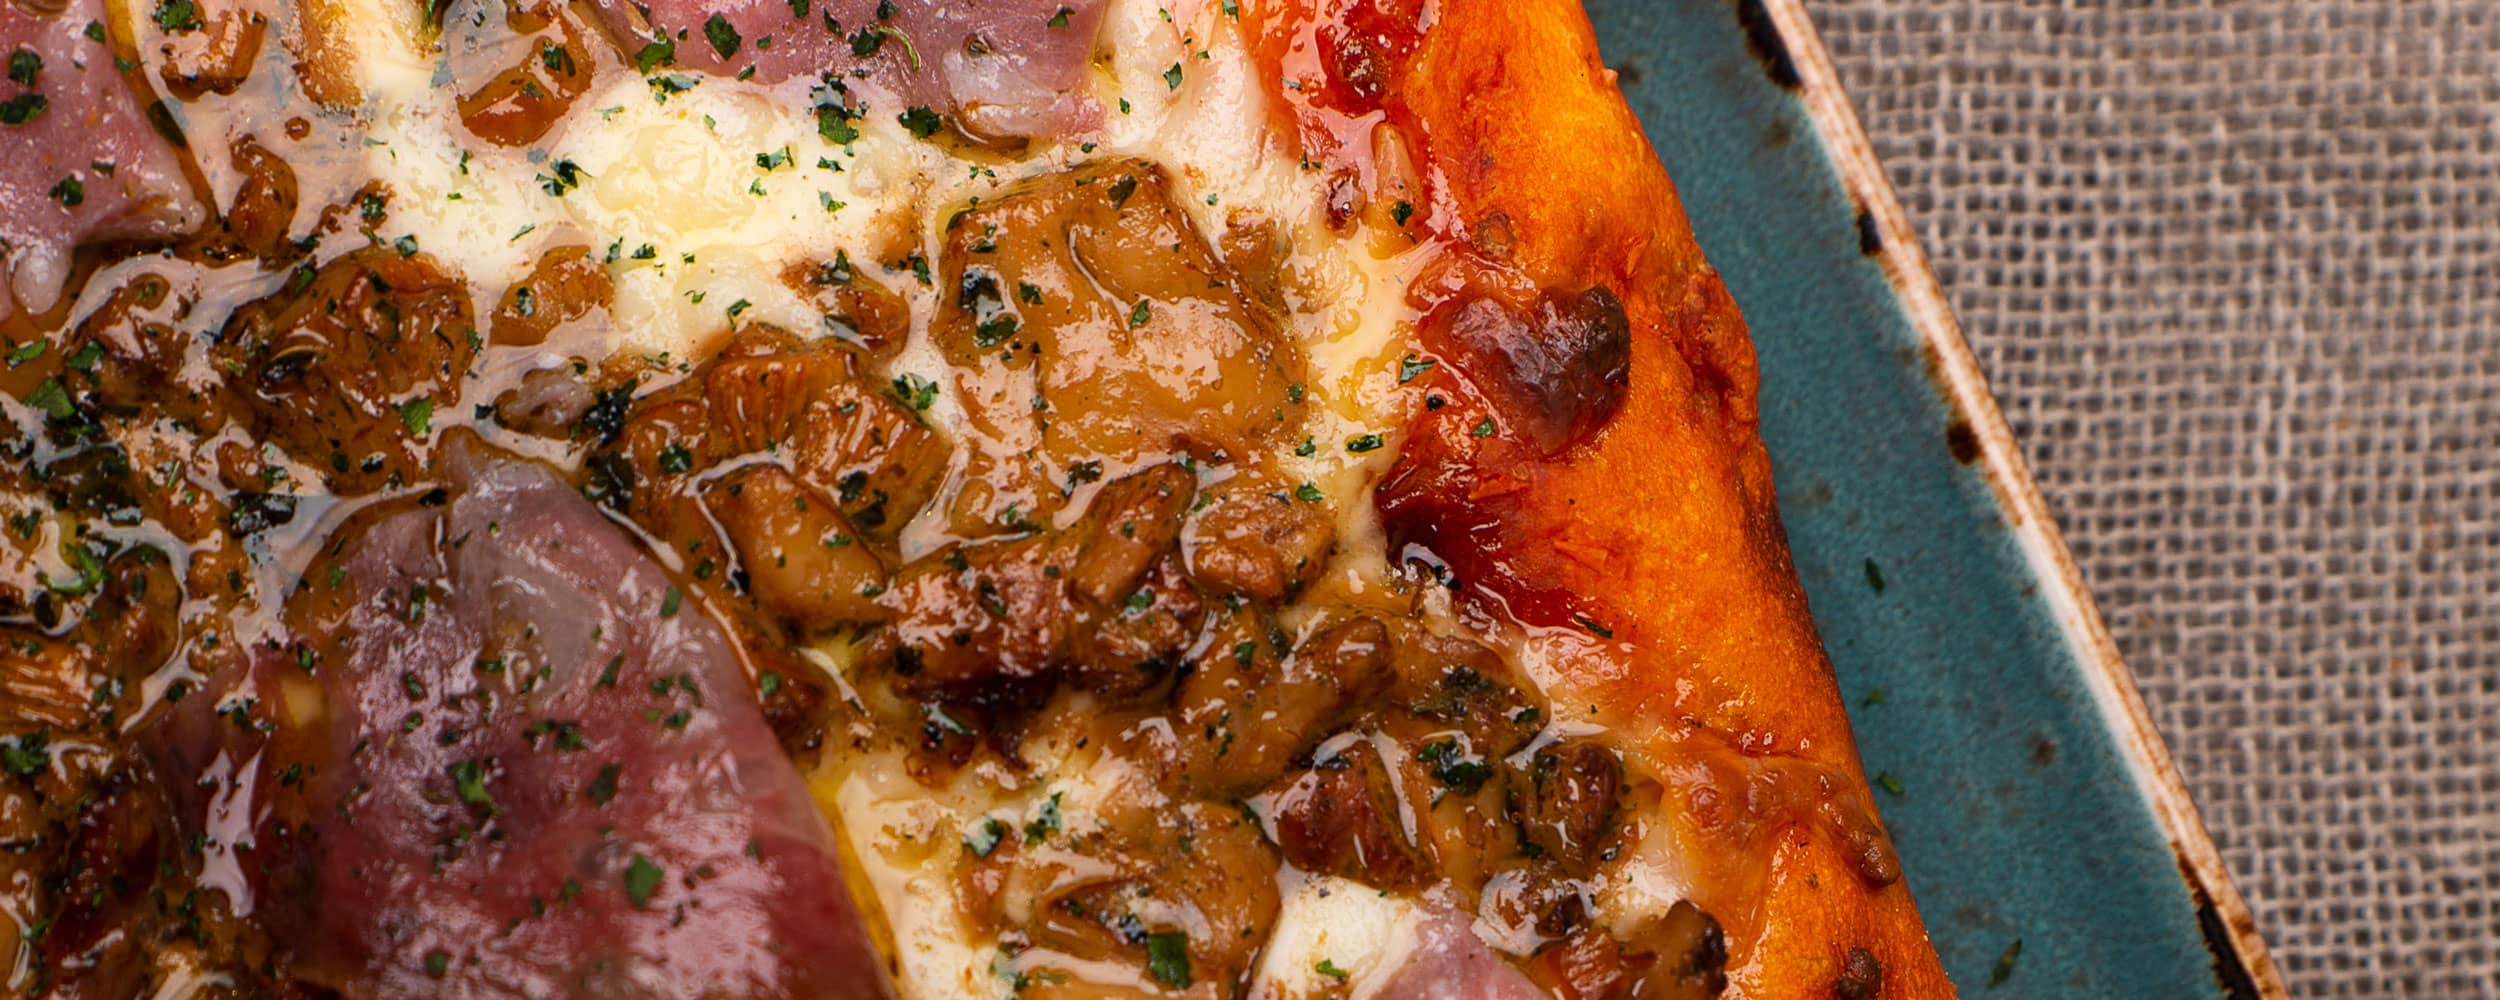 Pizza con Finocchiona | Food Photograhy per social media